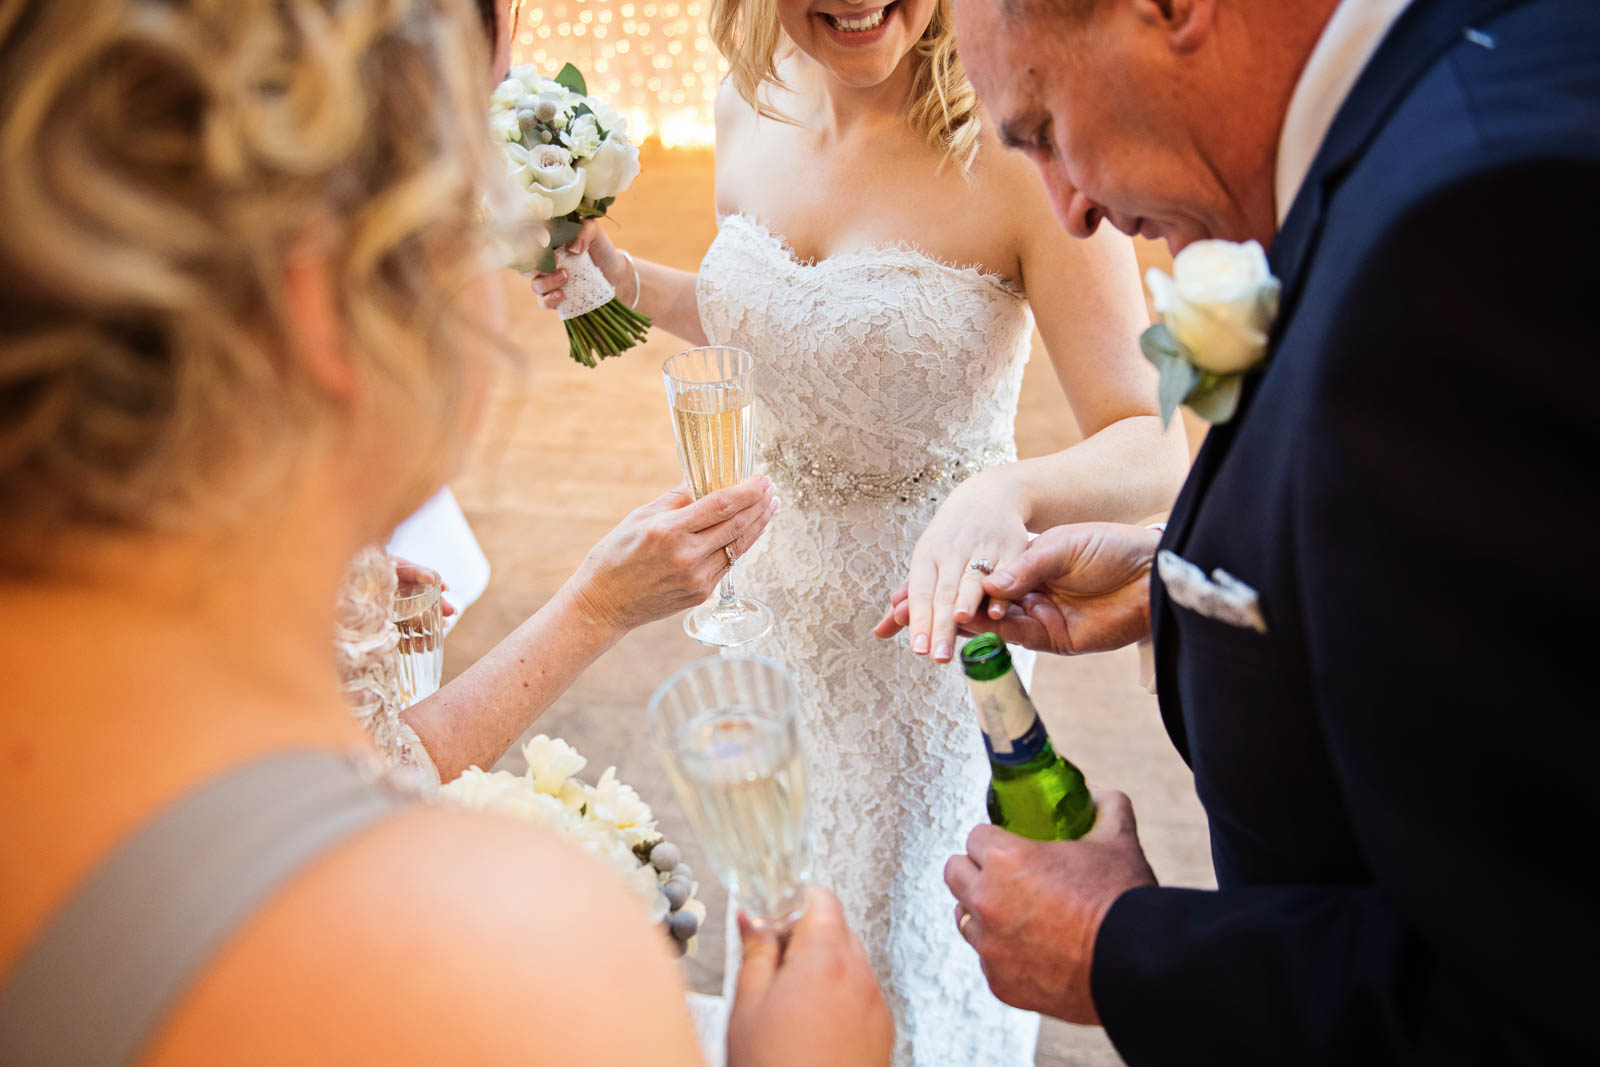 Wedding guests admiring the brides wedding ring.